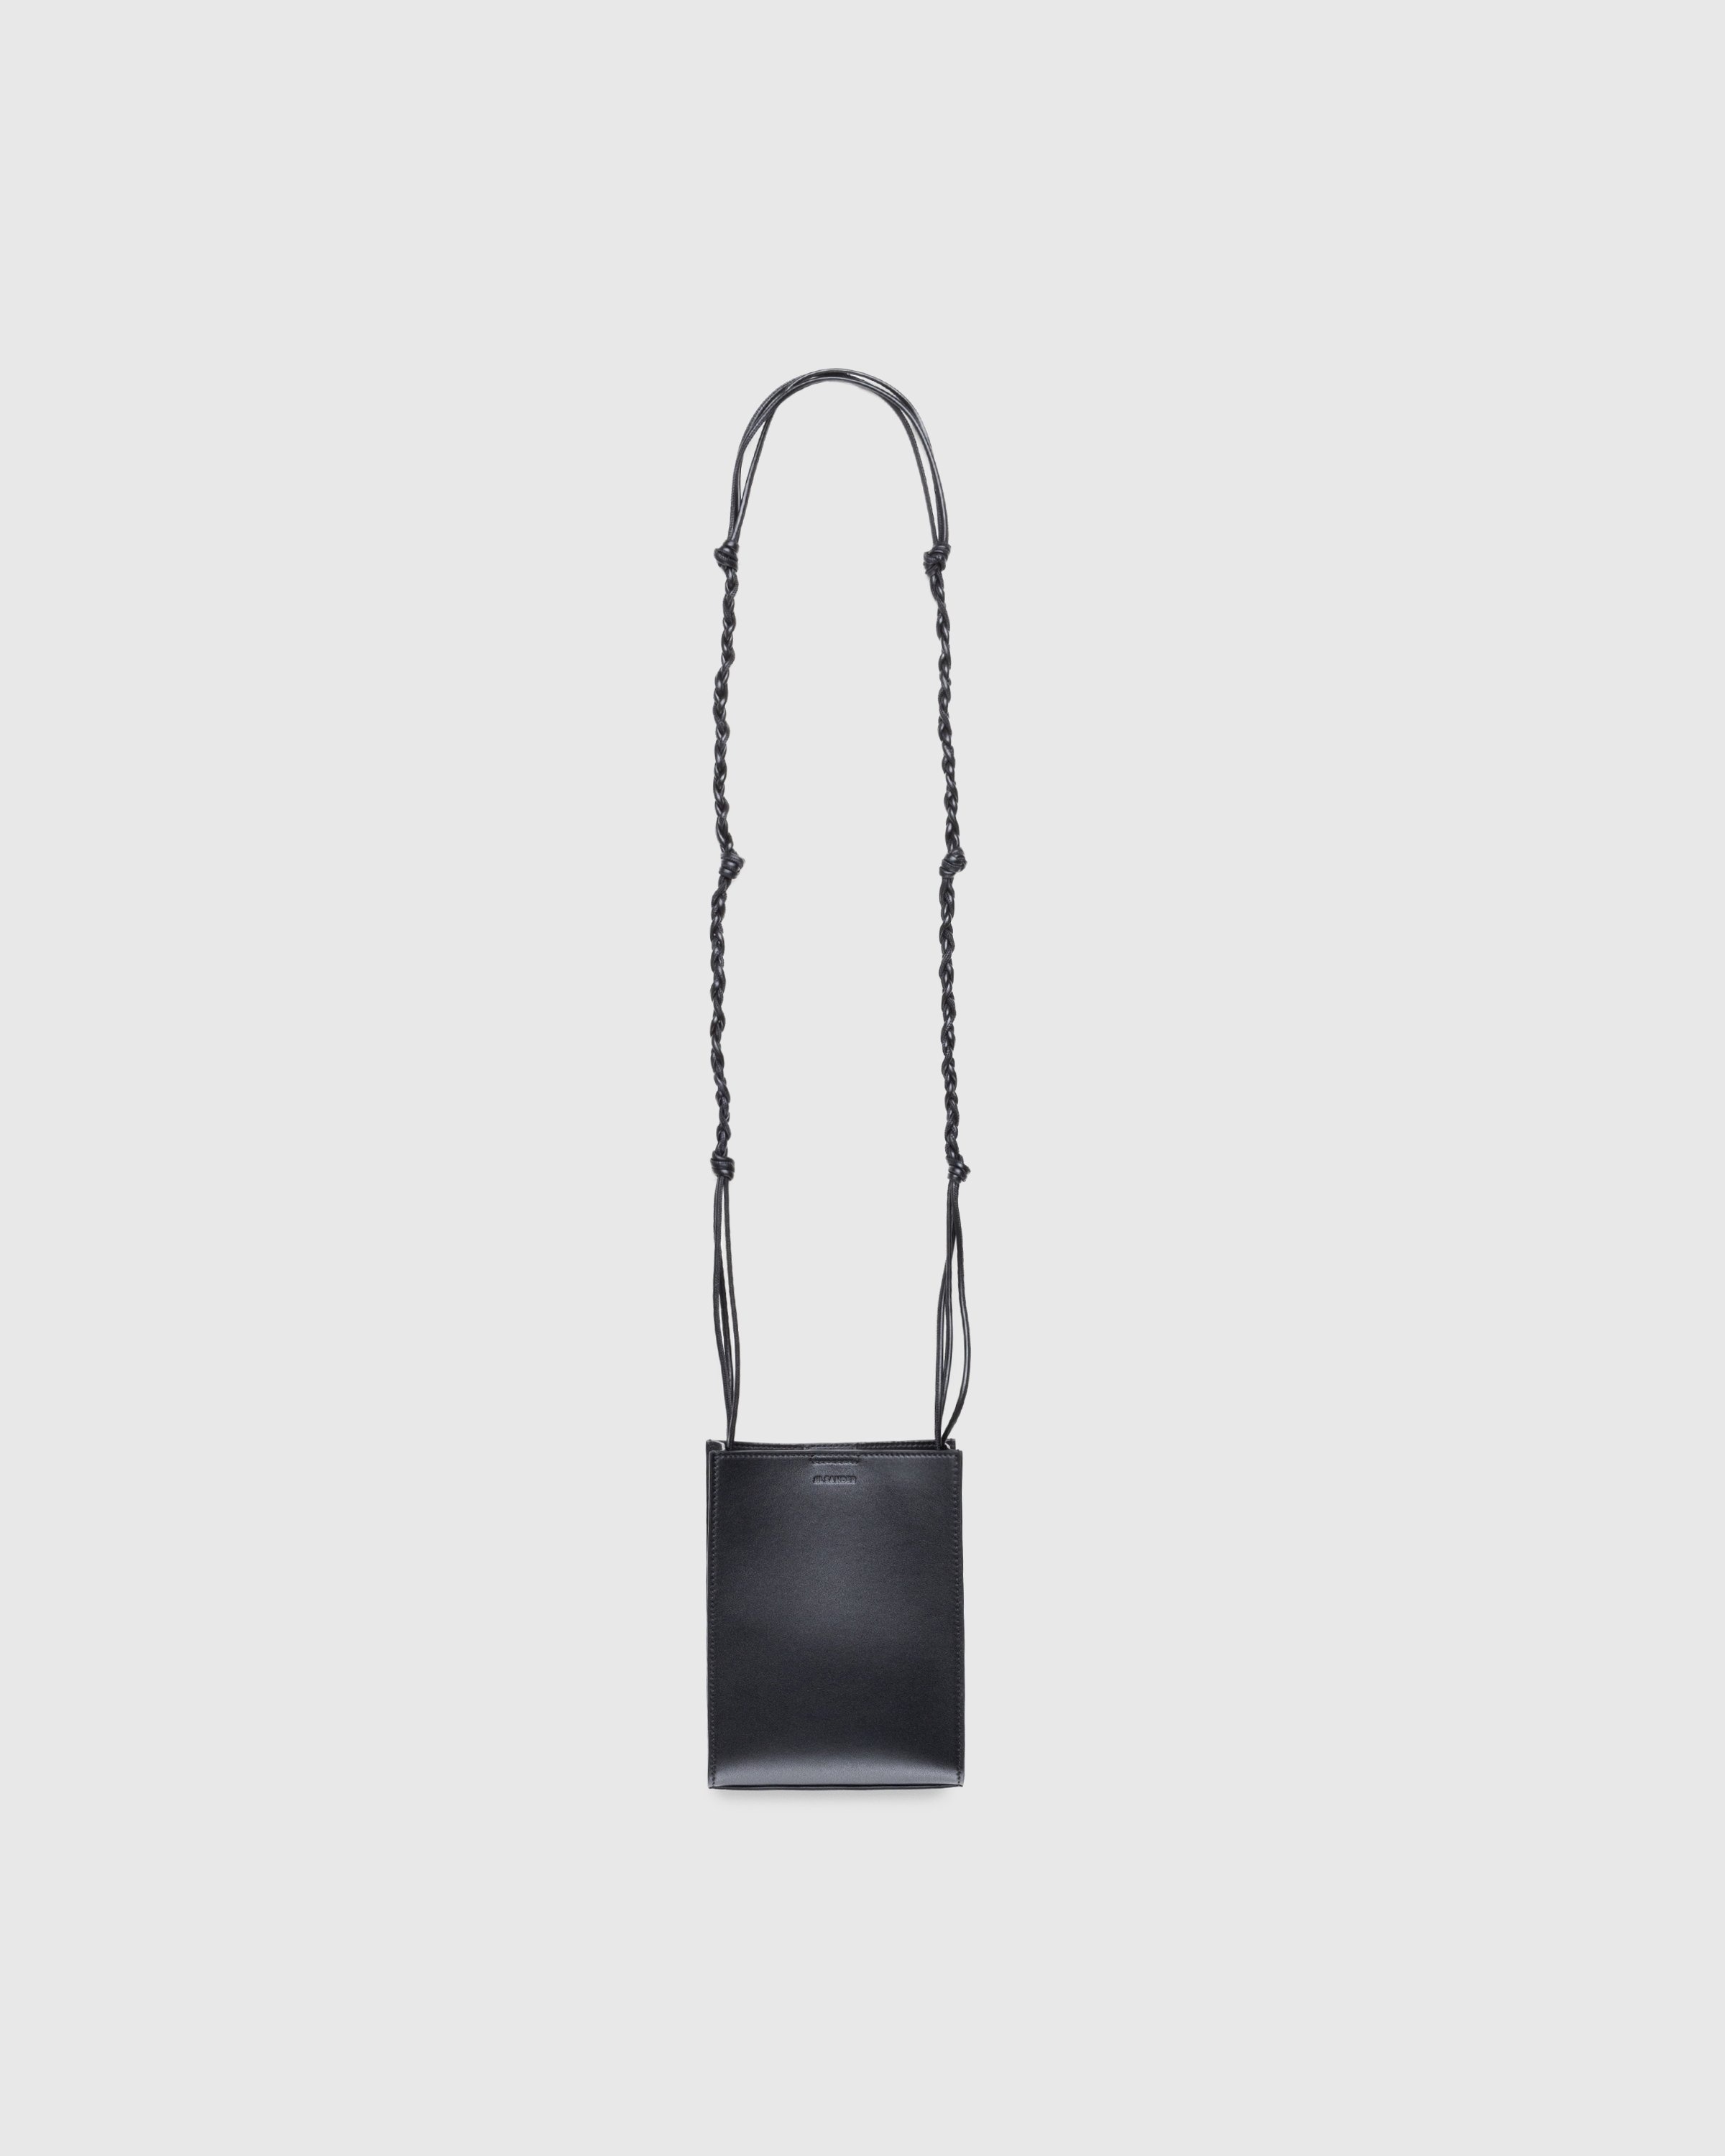 Jil Sander – Tangle Small Bag Black | Highsnobiety Shop